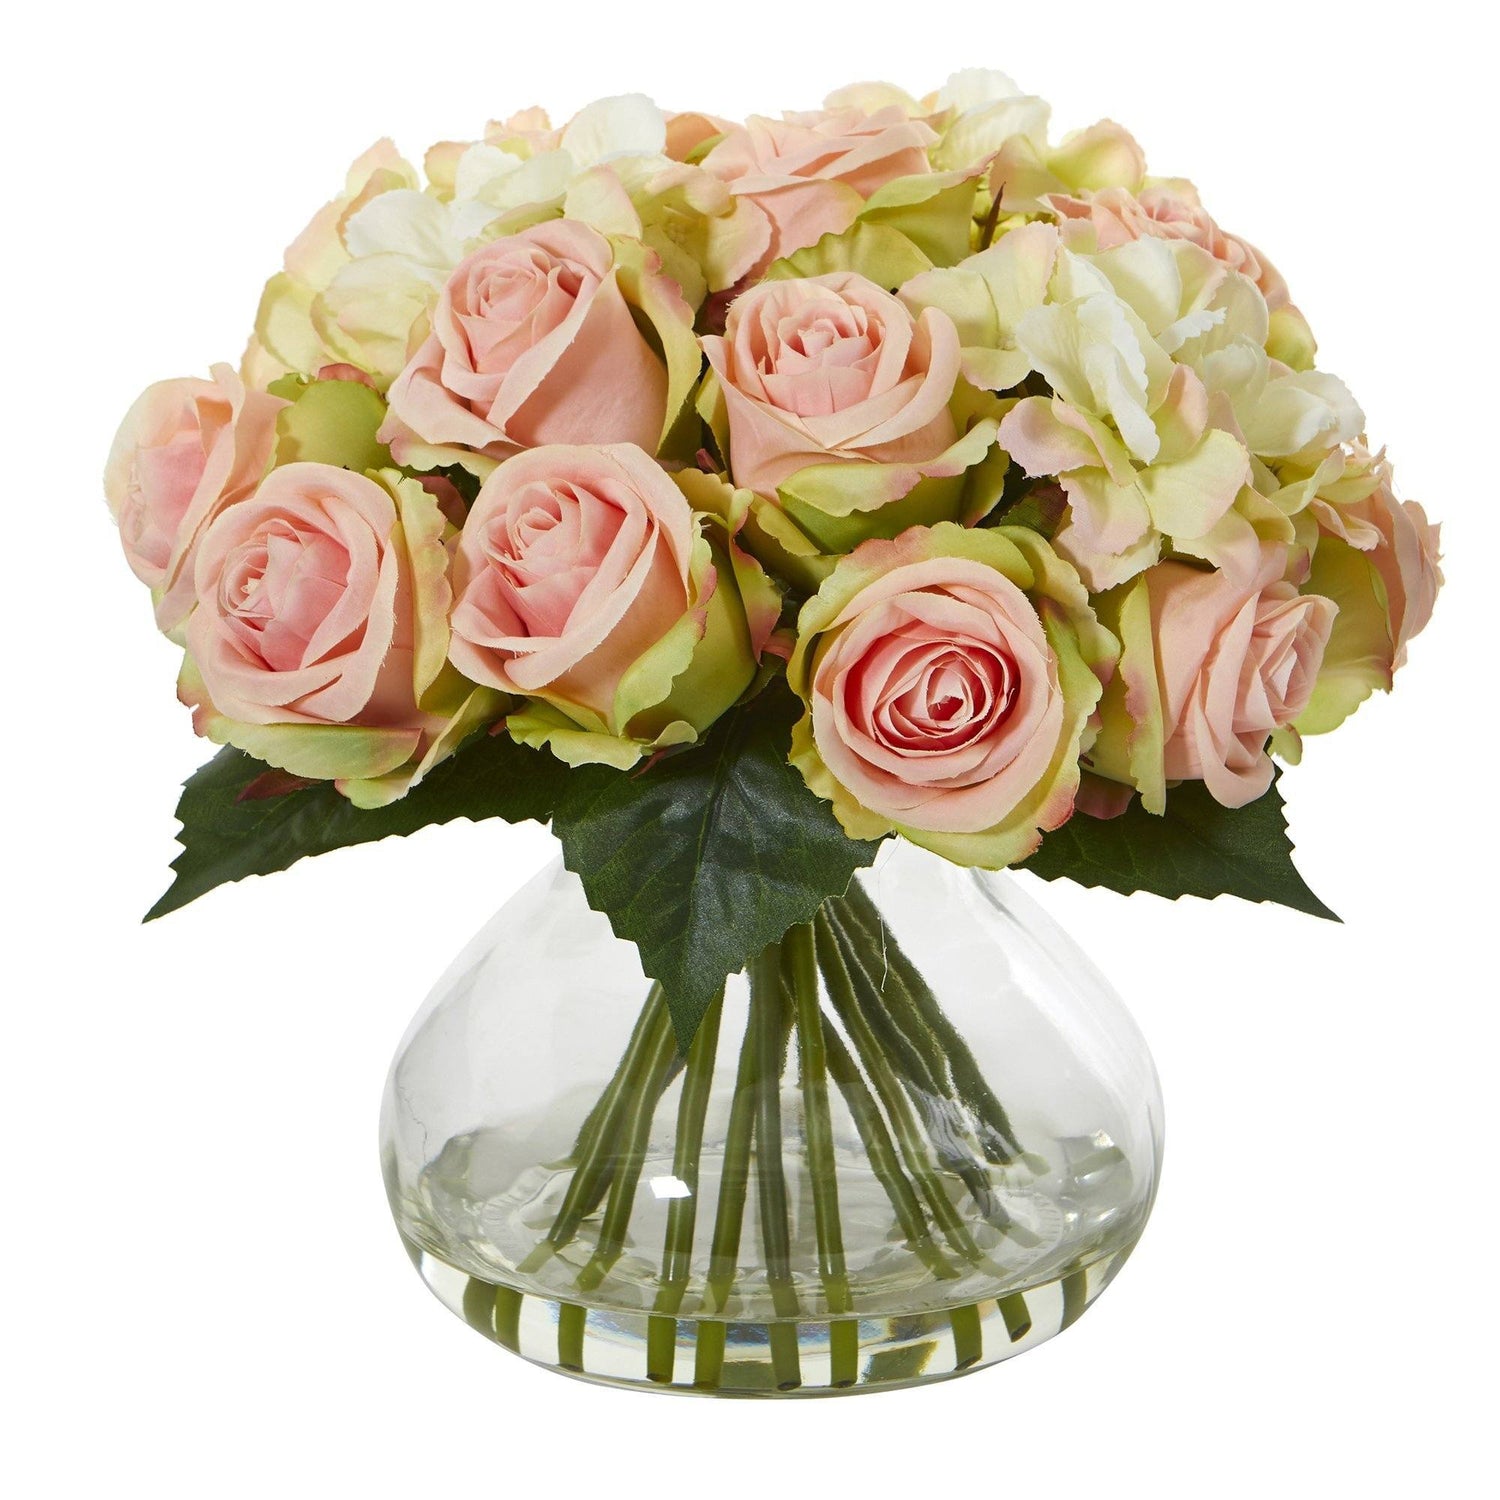 Rose and Hydrangea Artificial Arrangement in Glass Vase